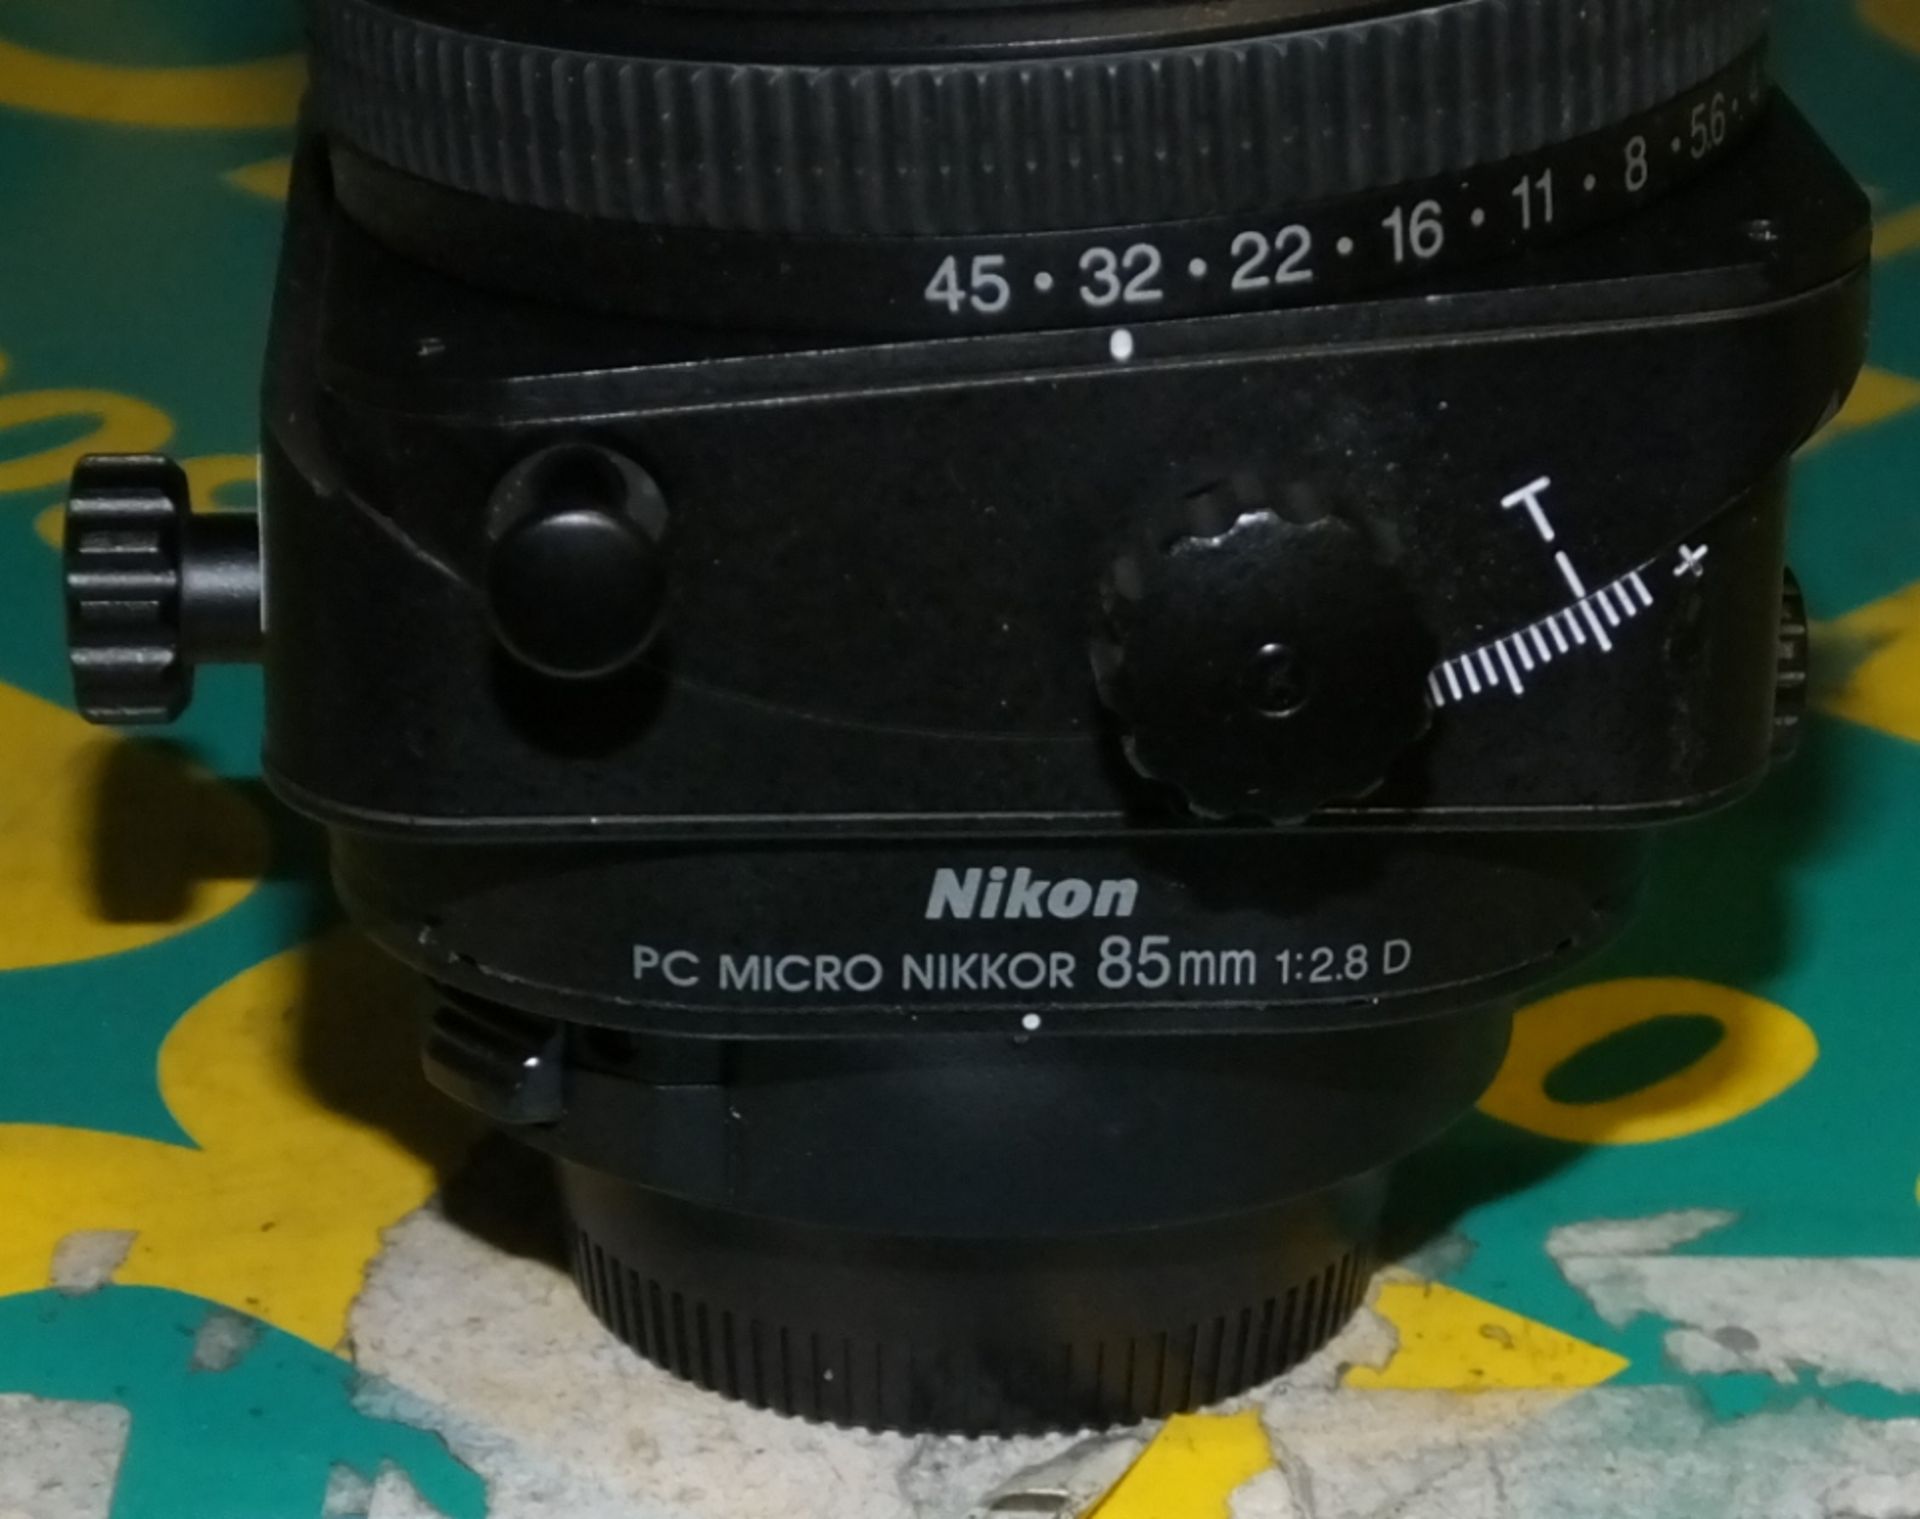 Nikon PC Micro Nikkor 85mm 1:2.8 D Tilt / Shift lens - Image 2 of 5